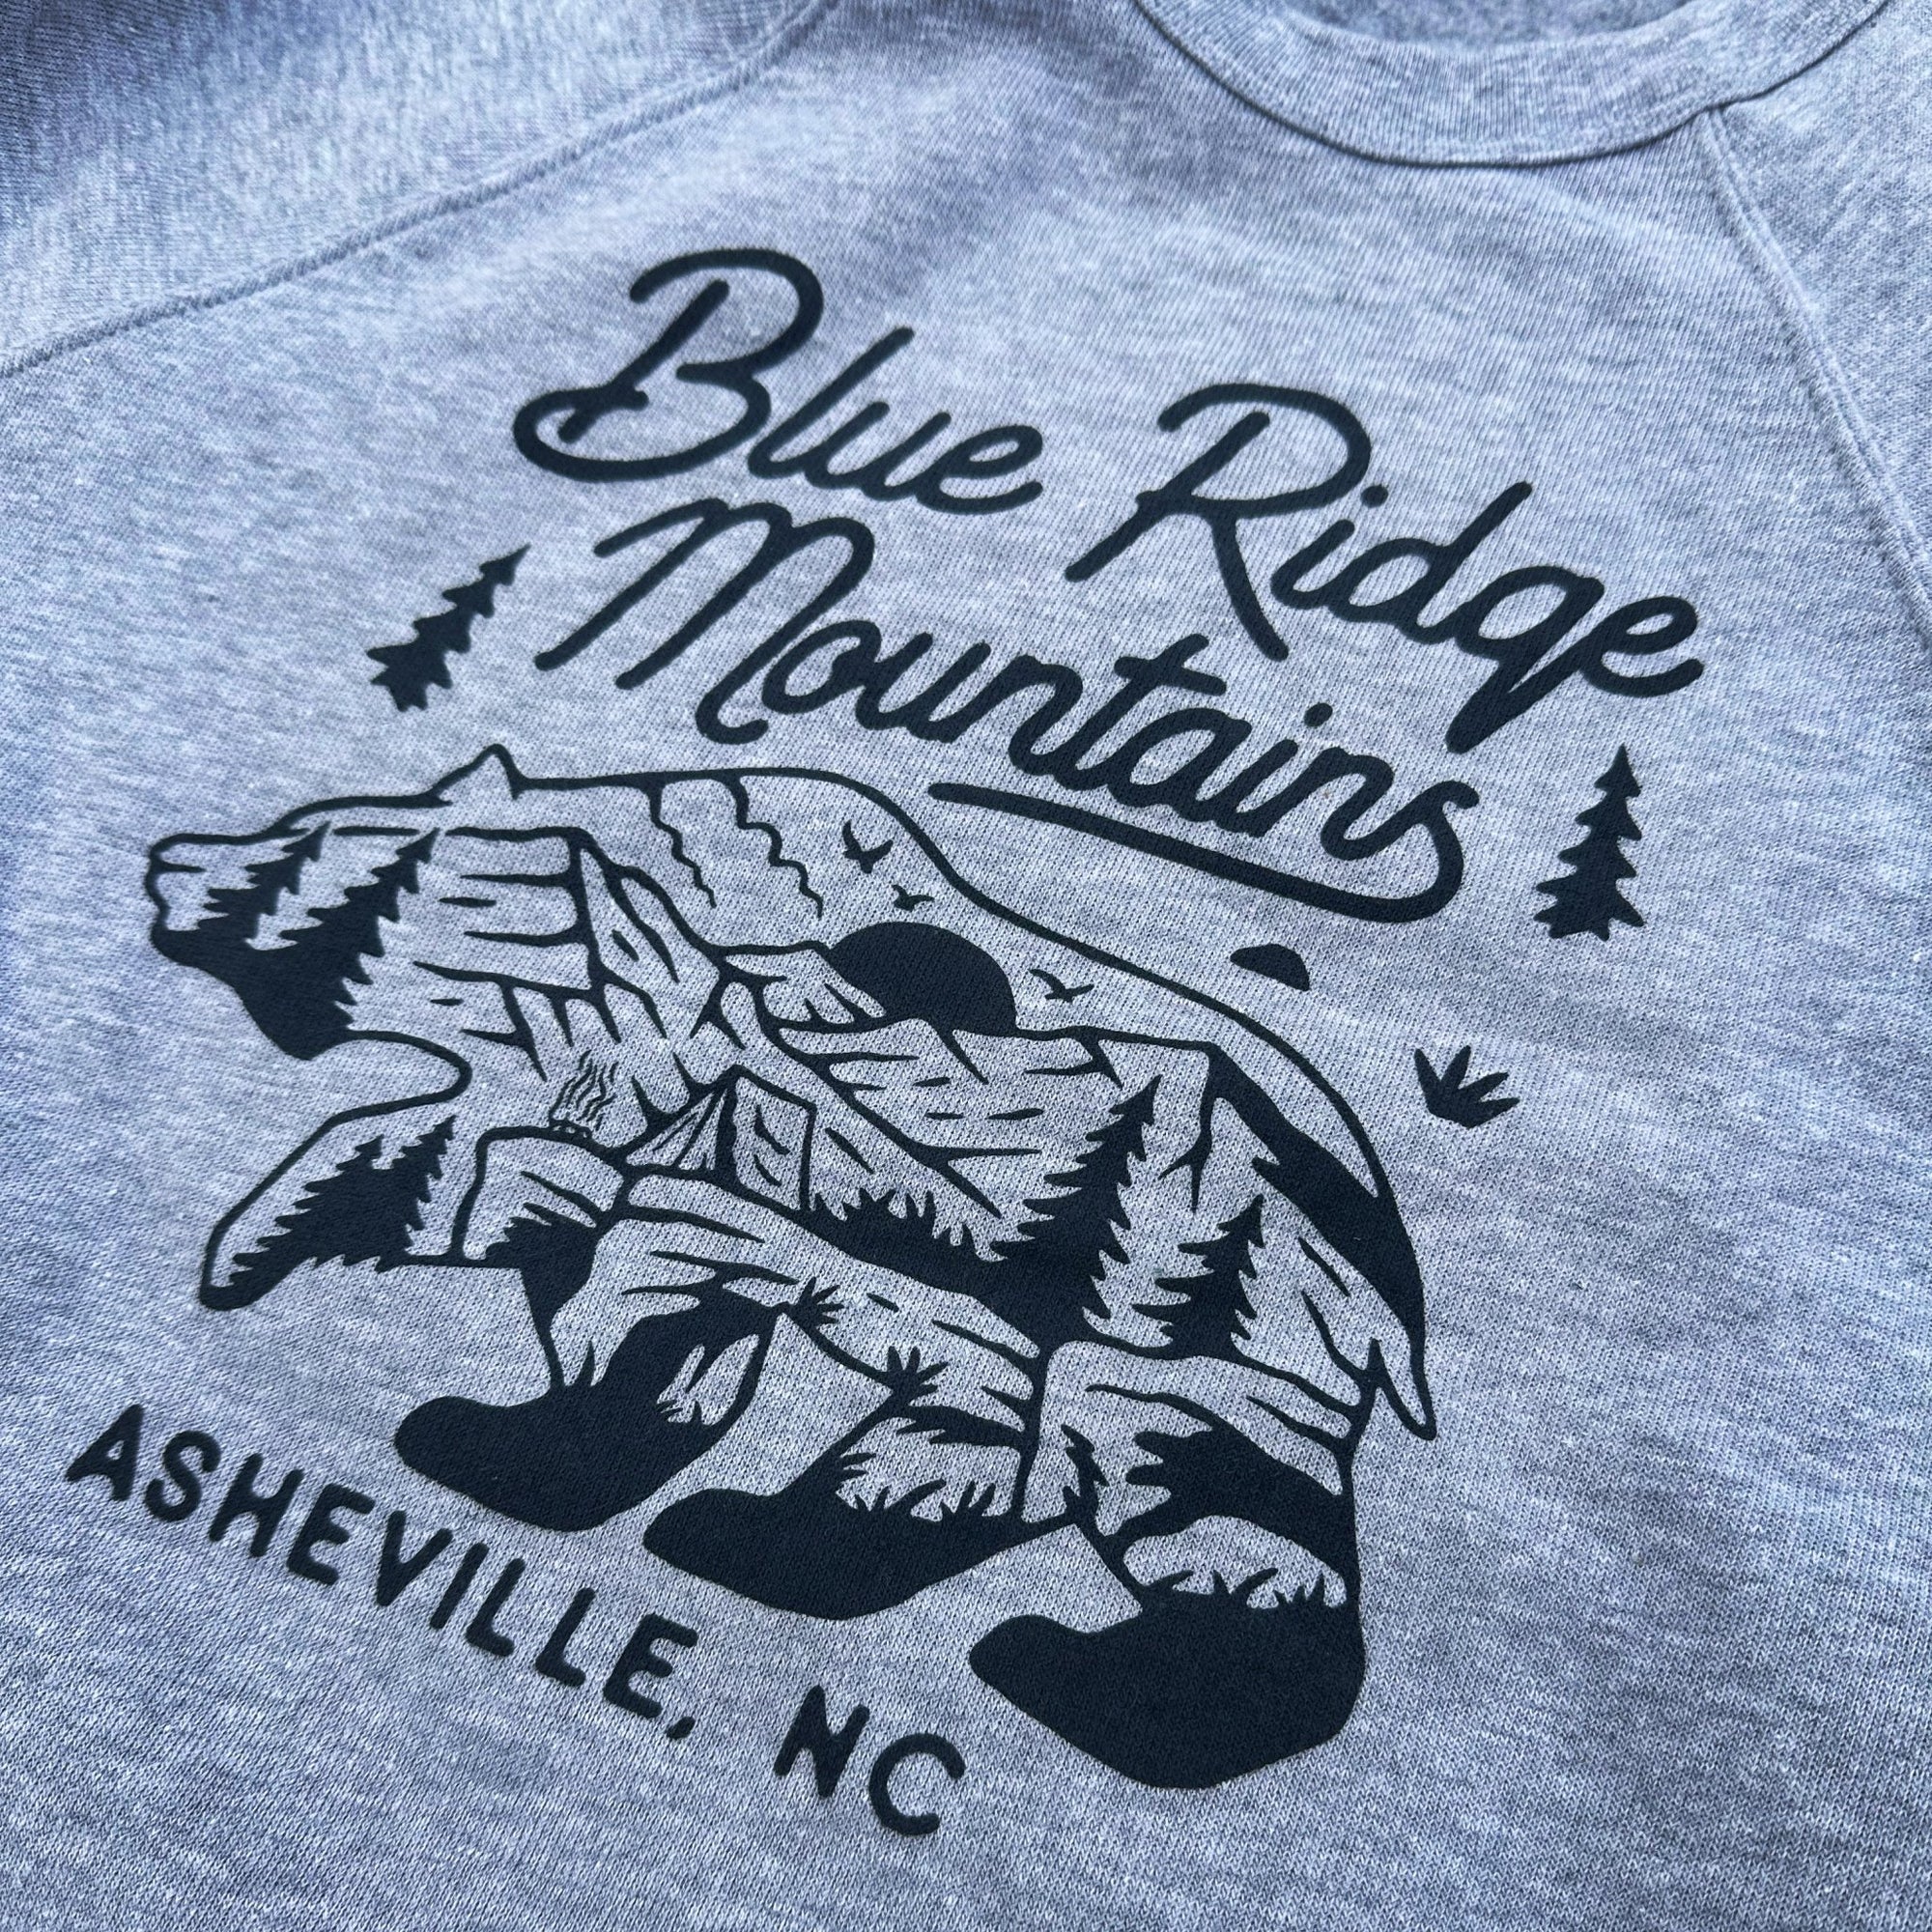 Blue Ridge Mountains Bear - menottees